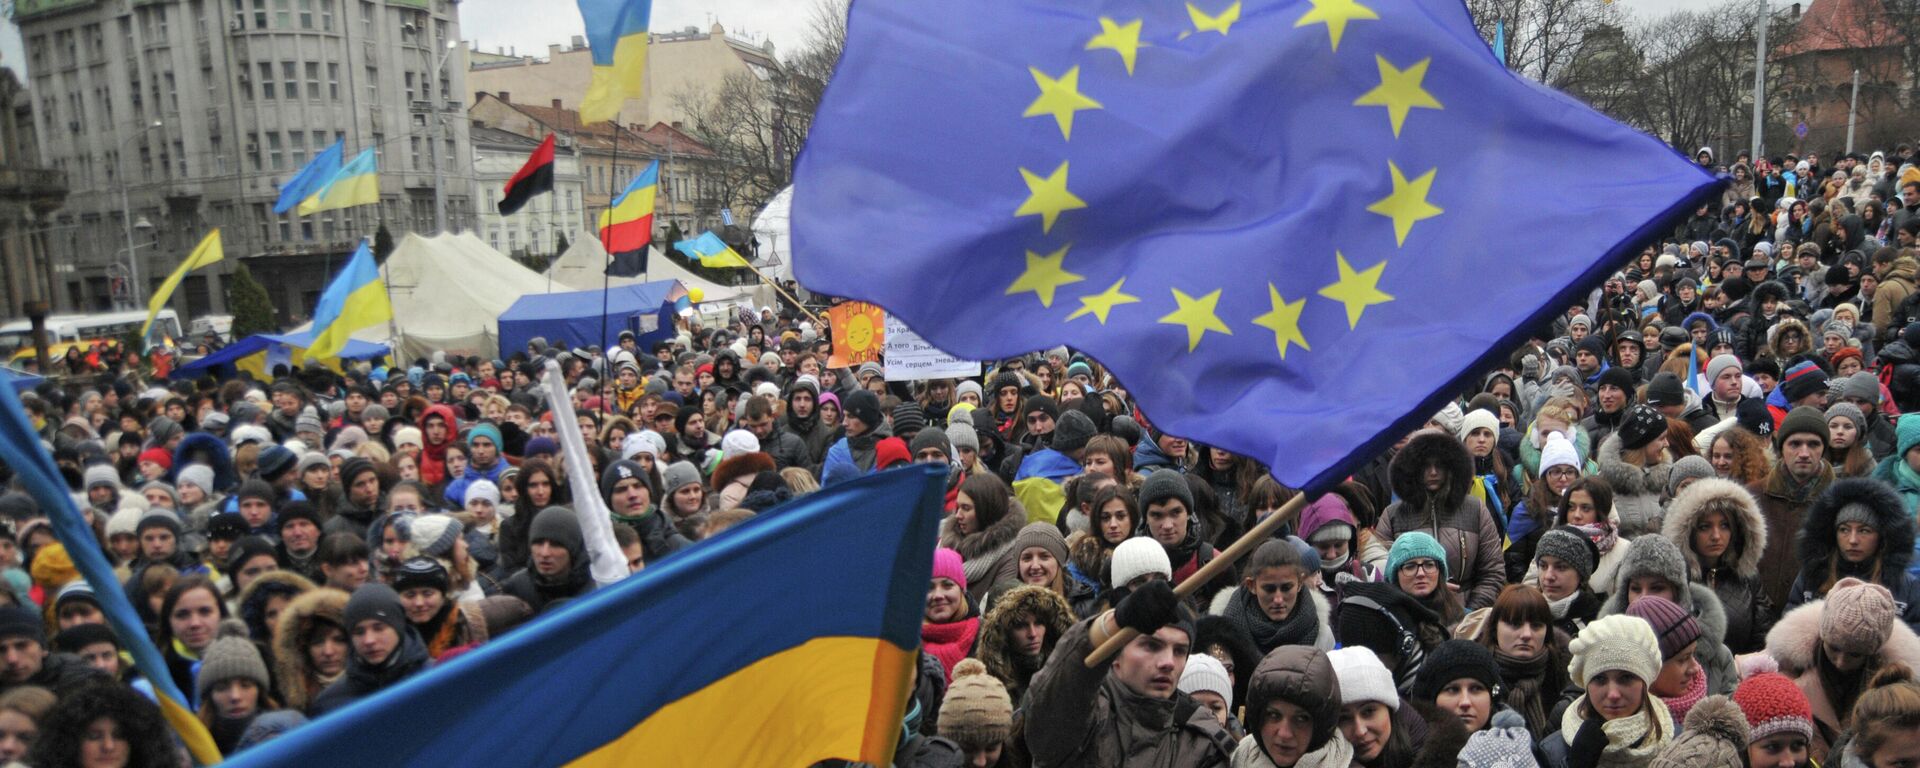 Participantes ucranianos en una manifestación a favor de la integración europea frente al monumento a Tarás Shevchenko en Lviv. - Sputnik Mundo, 1920, 01.02.2022